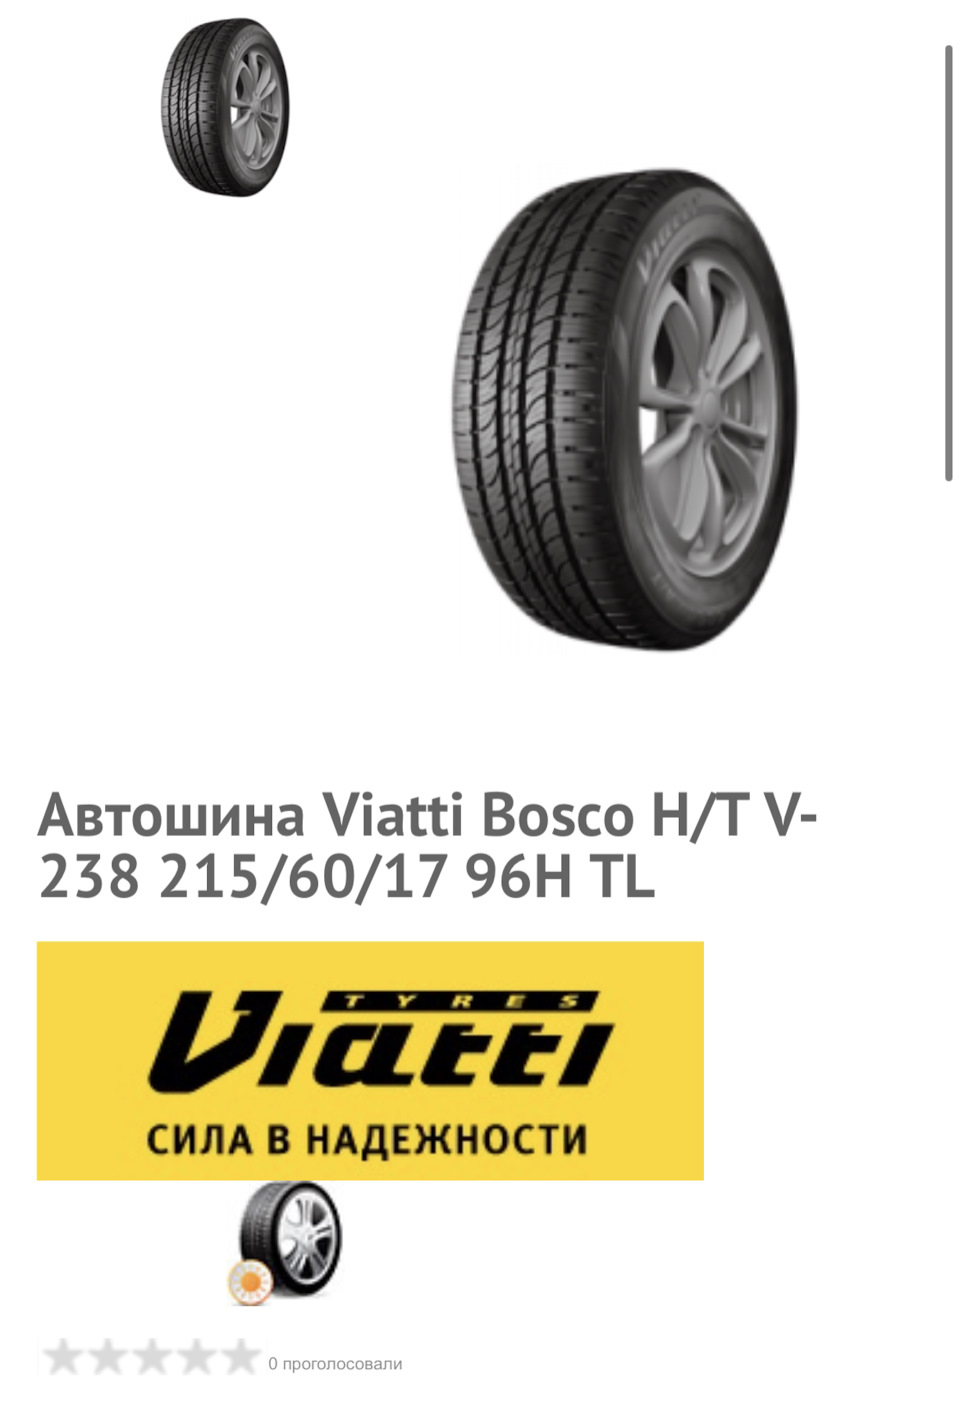 Viatti v 238 bosco h t отзывы. Viatti Bosco h/t (v-238). Viatti Bosco h/t v-238 квронаклейка. Вес покрышки r17. Летние шины 215/60 r17 рифленые.